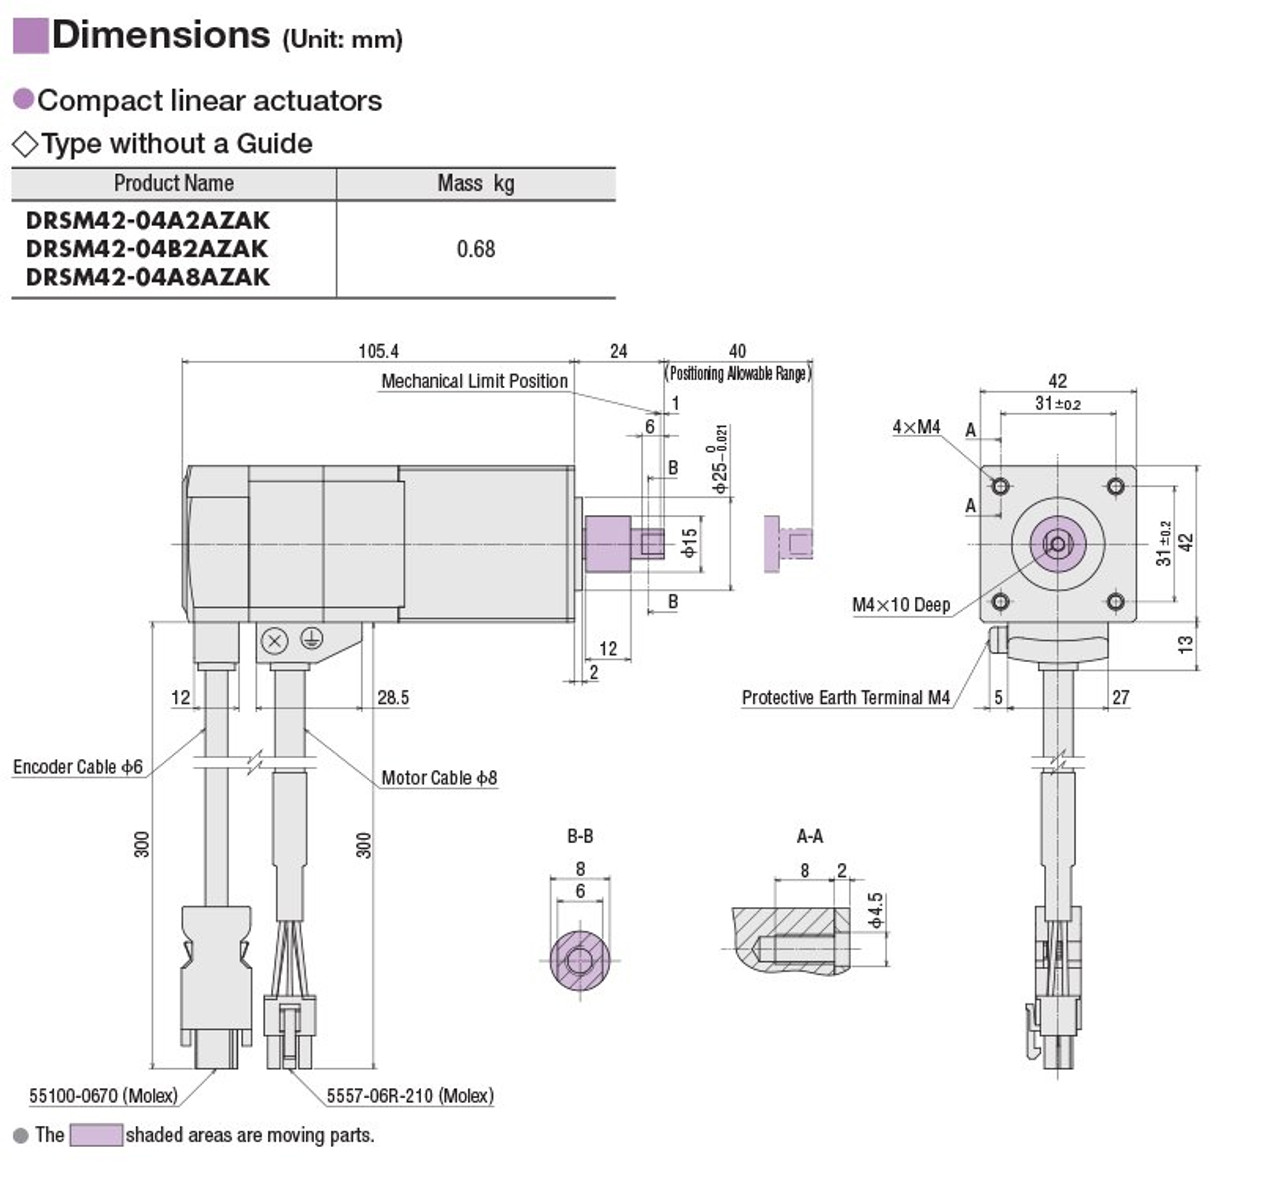 DRSM42-04A2AZAK - Dimensions